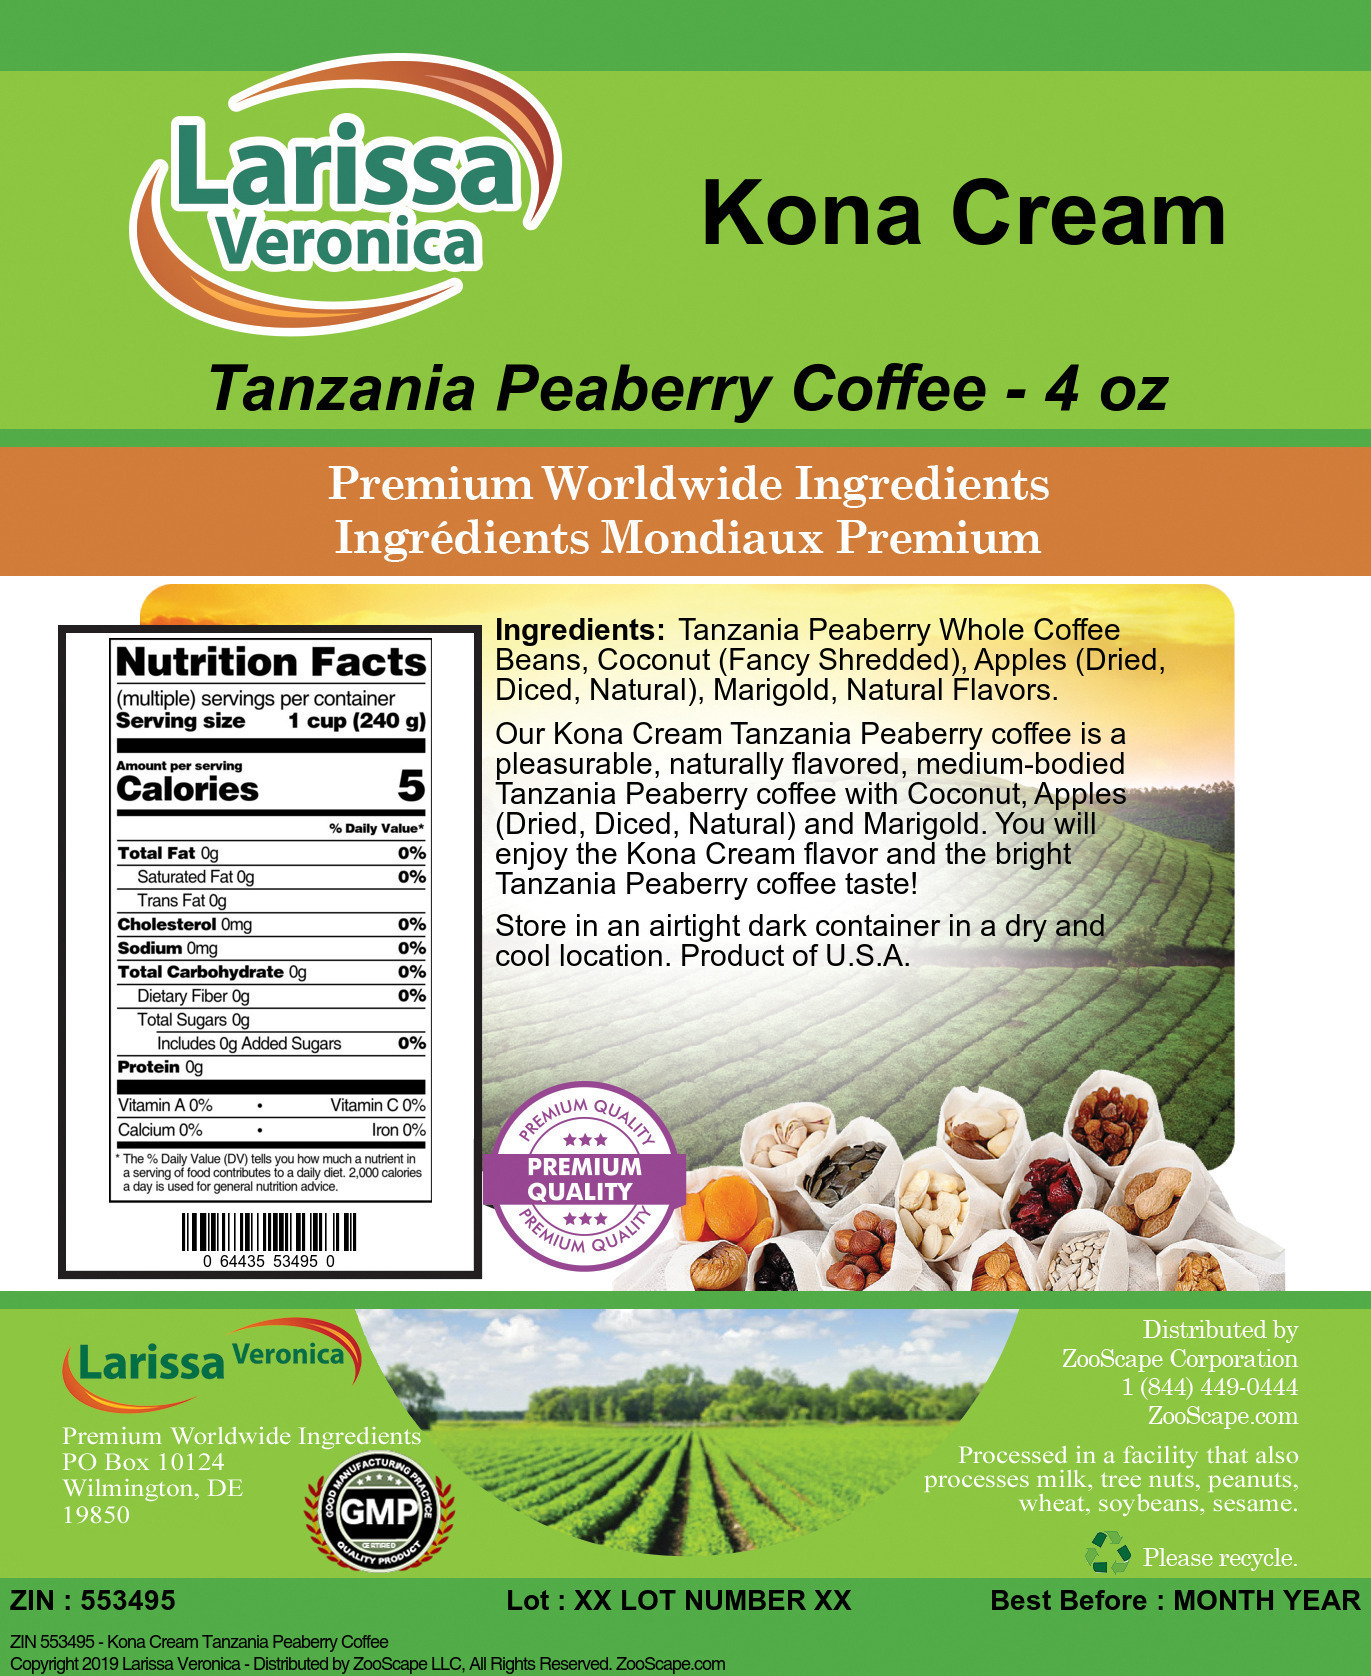 Kona Cream Tanzania Peaberry Coffee - Label